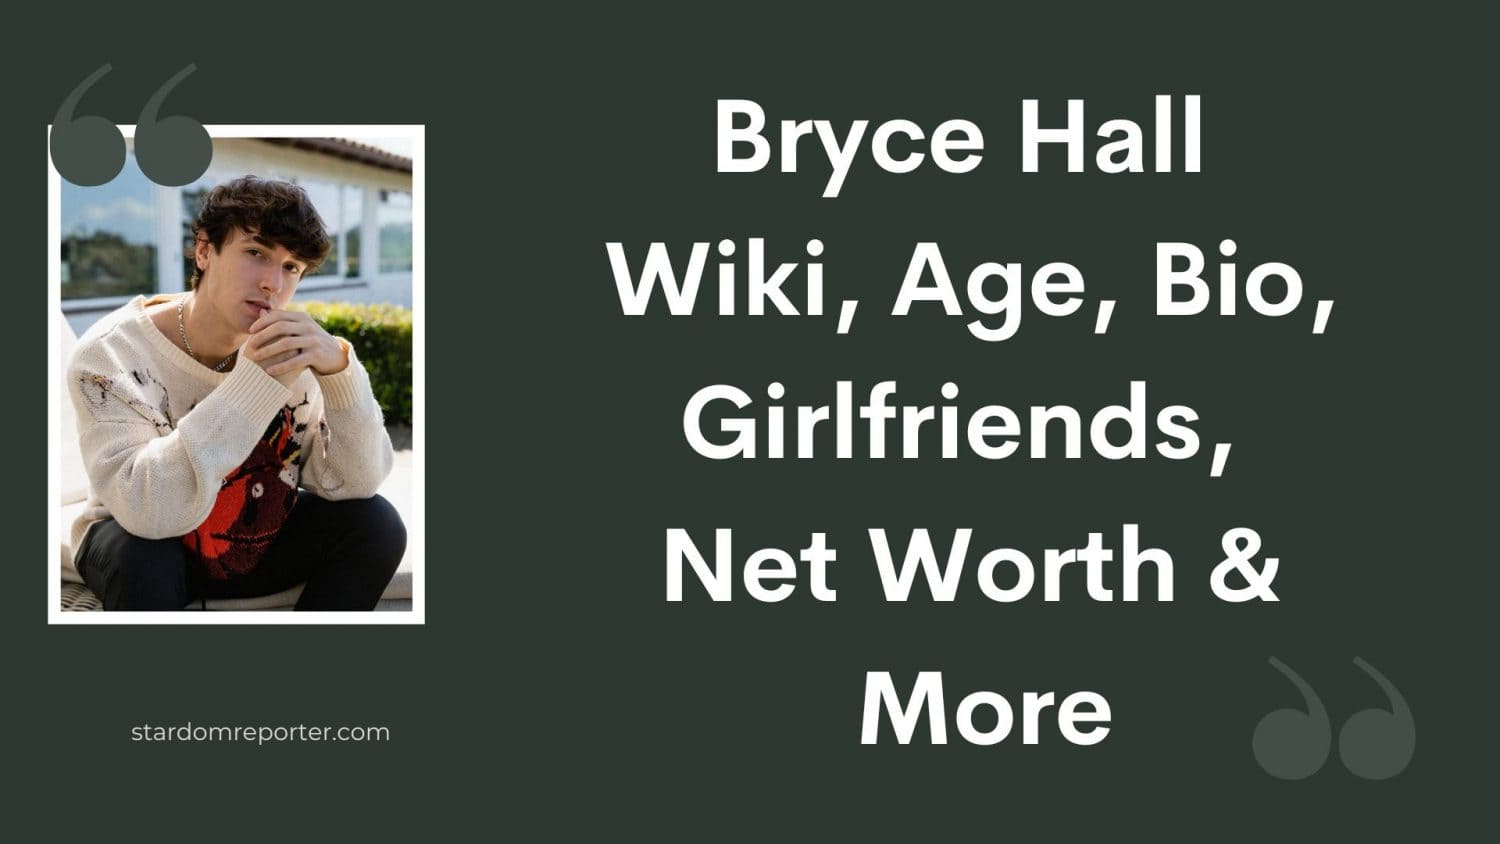 Bryce Hall Wiki, Age, Bio, Girlfriends, Net Worth & More - 17